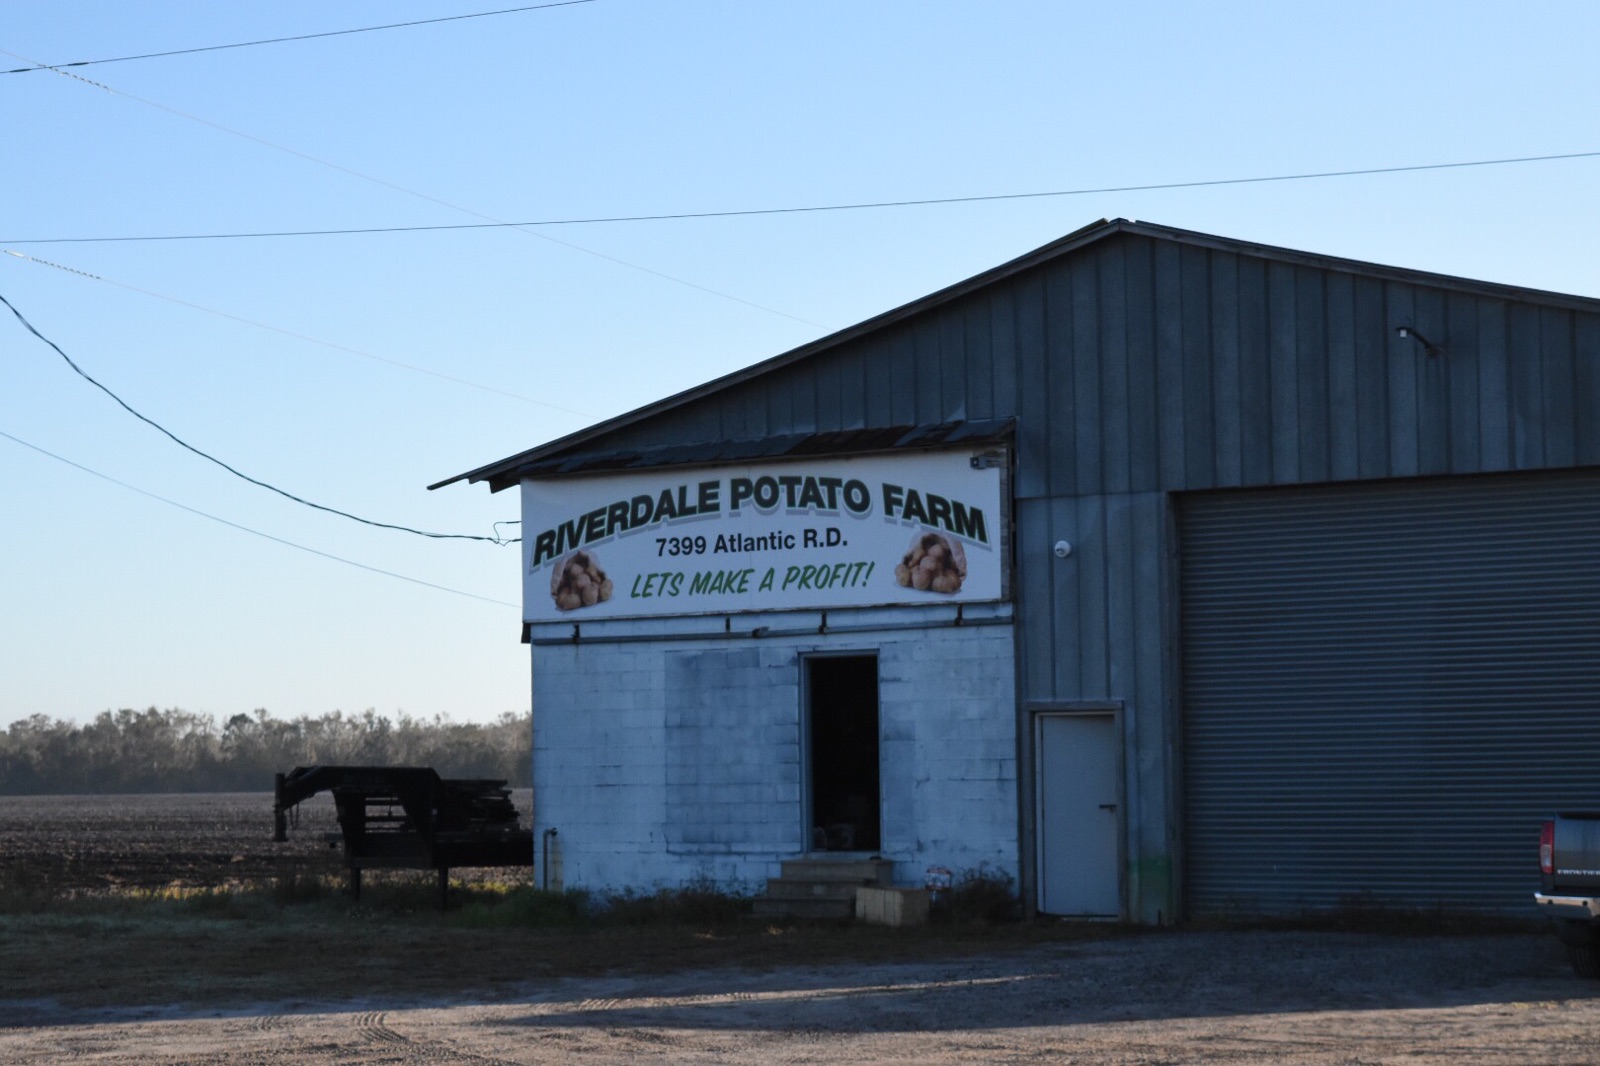  Riverdale Potato Farm includes a little over 1,000 acres, growing chip-potatoes and carrots.&nbsp;&nbsp; 